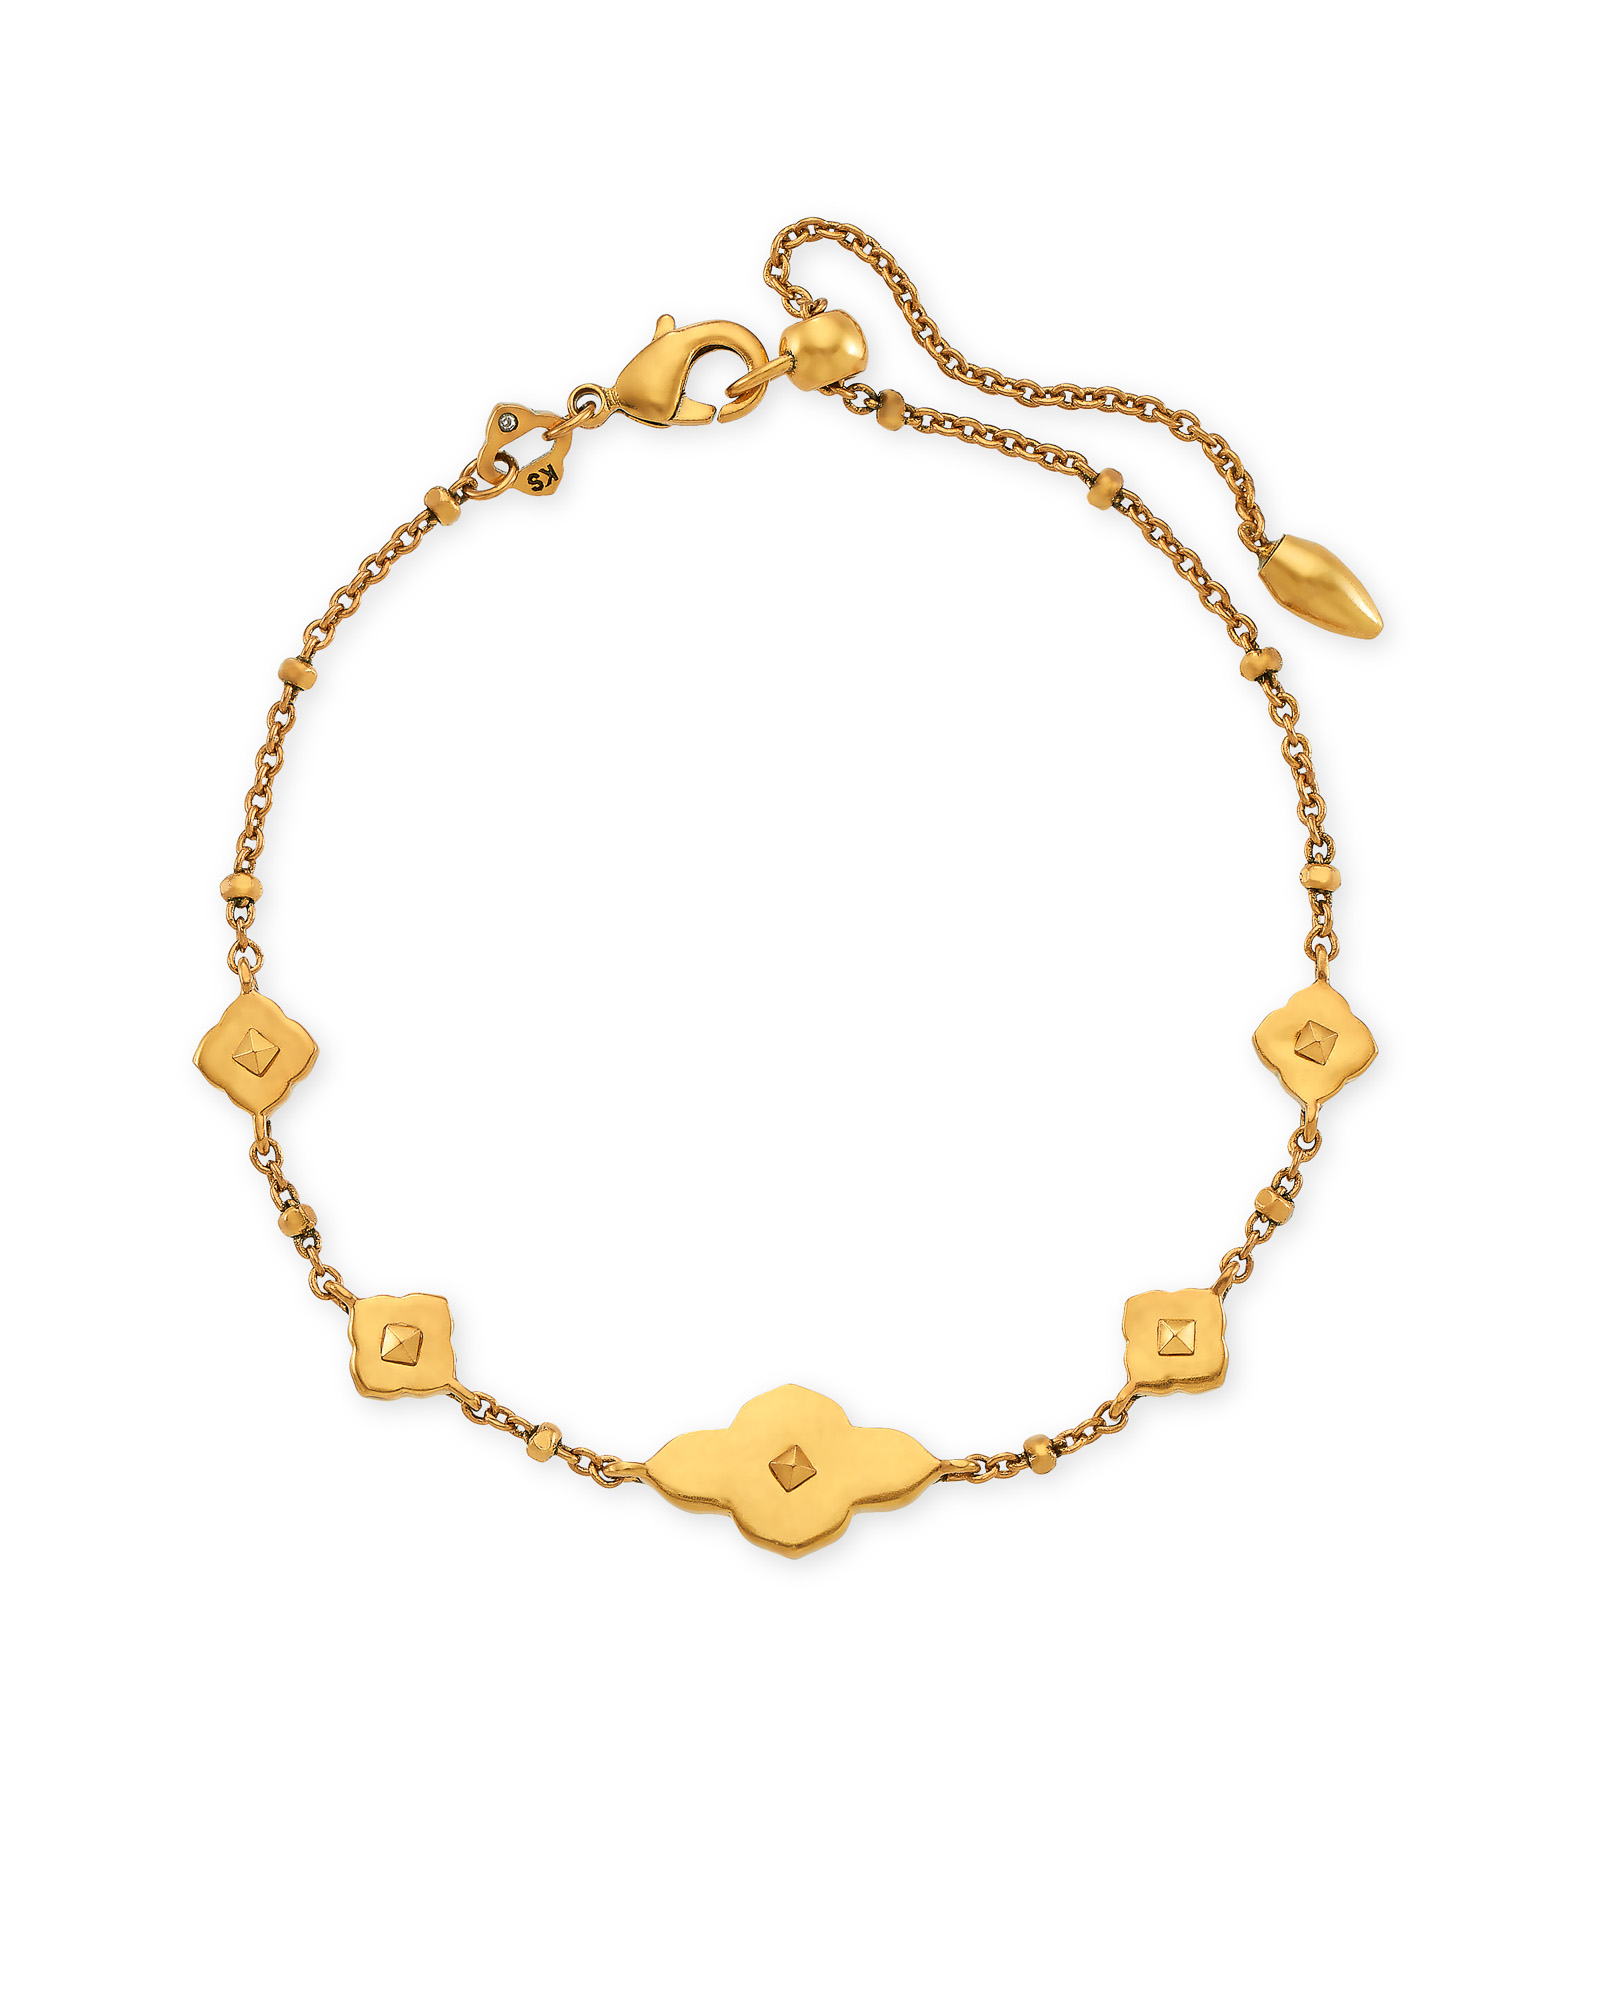 Selling: 18k Rose Gold Plated Silver Monogram Bracelet- $ 58.00